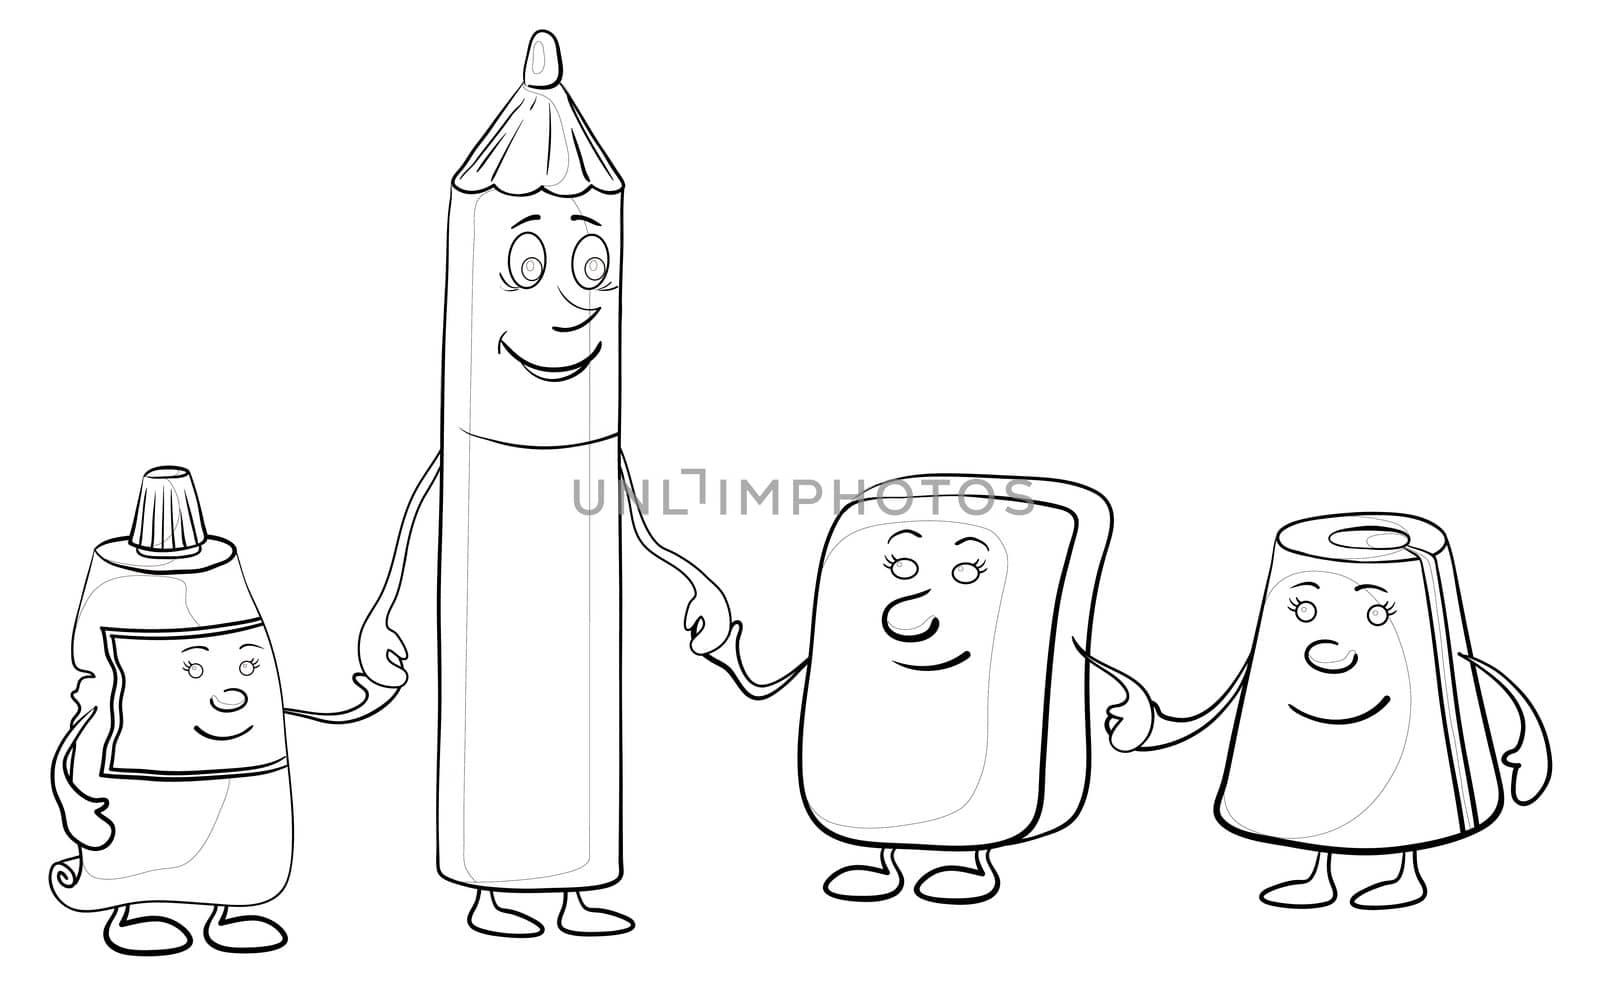 Cartoon, contours, pencil and stationery children: tube, eraser, pencil sharpener, contours